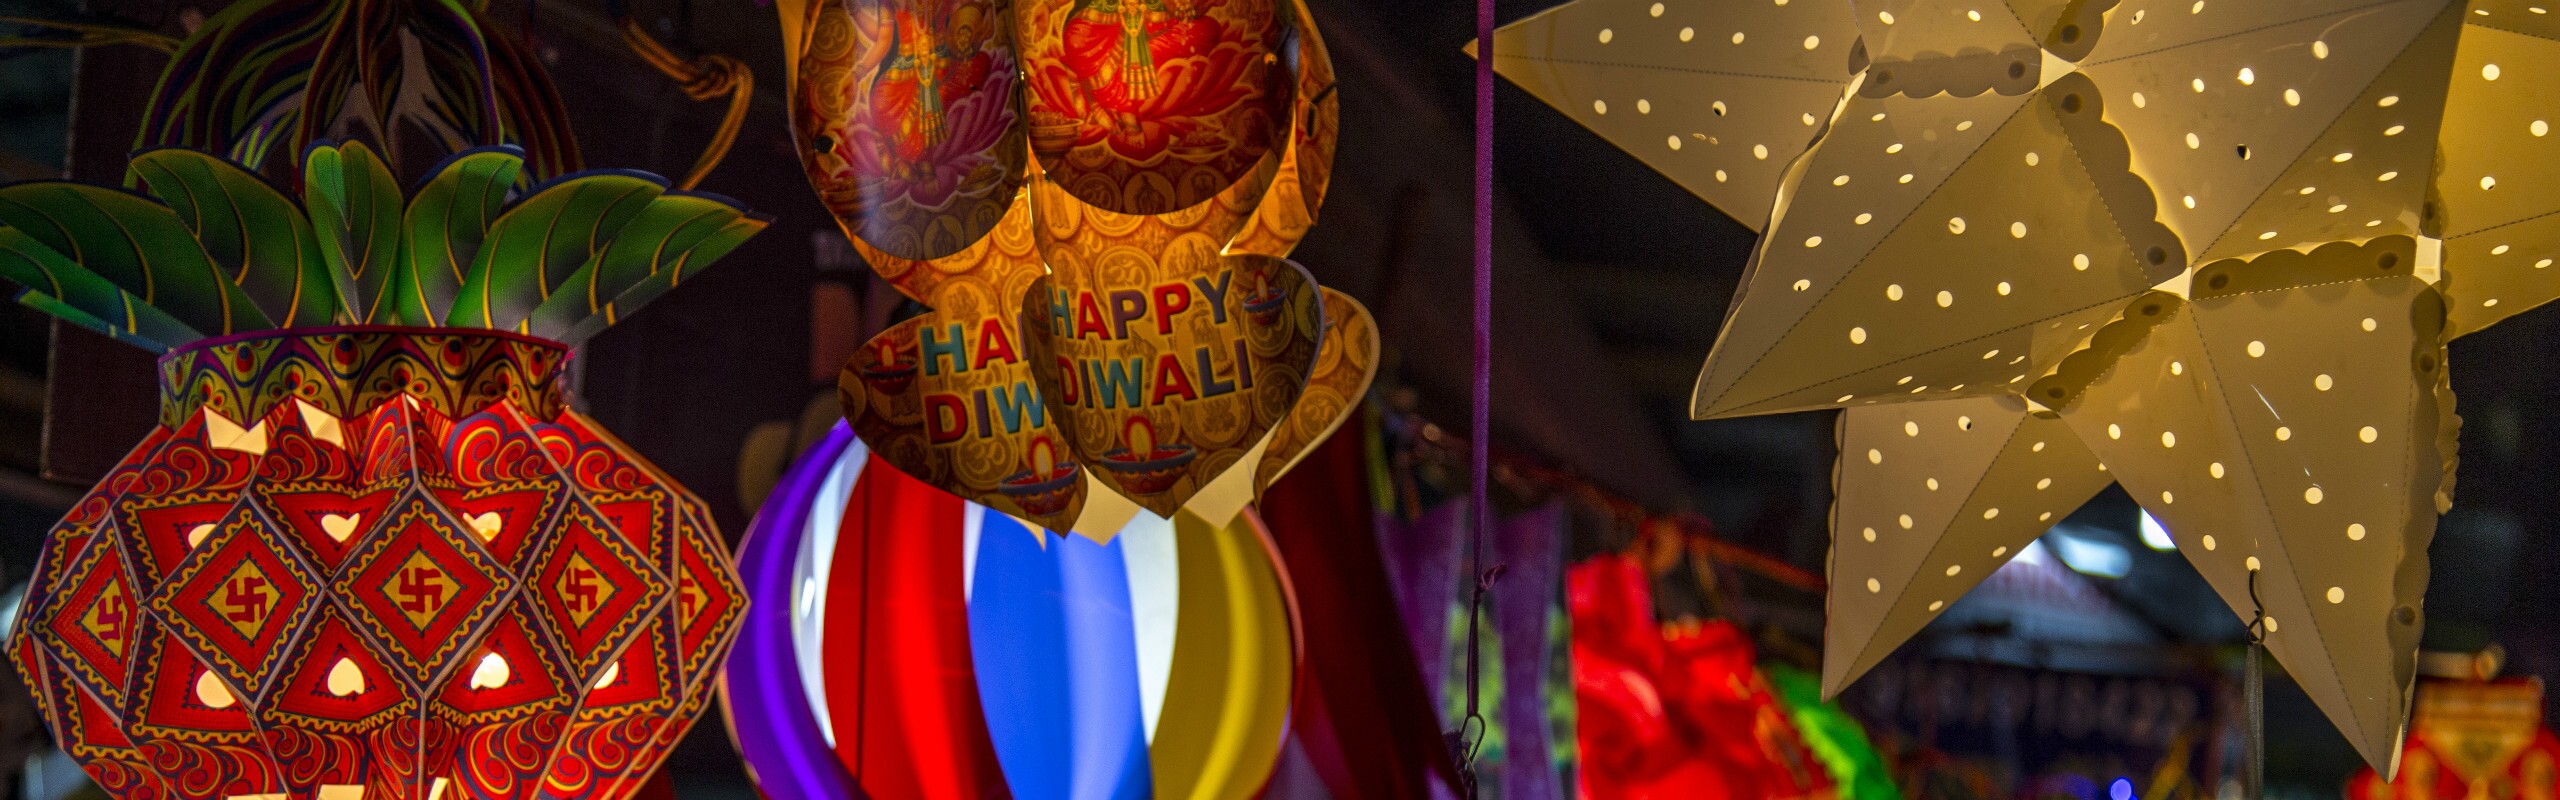 13 Diwali Interesting Facts